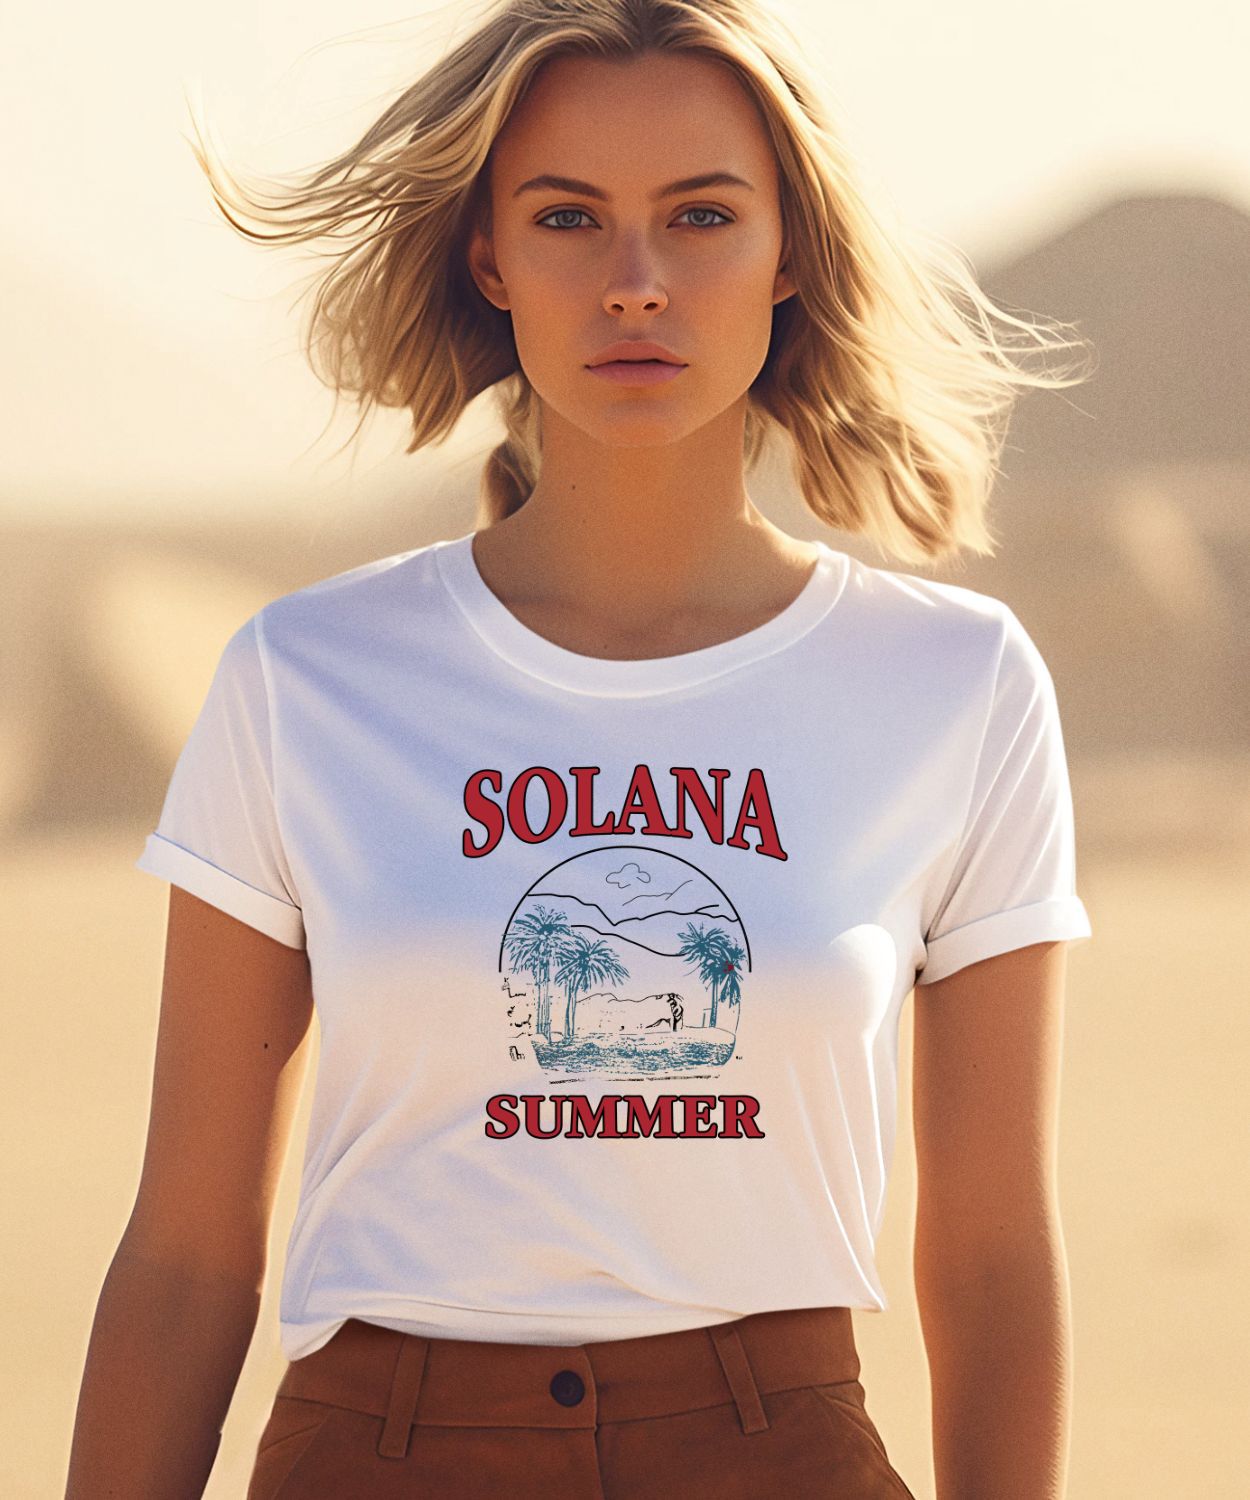 Taylor Swift Wearing Solana Summer Shirt